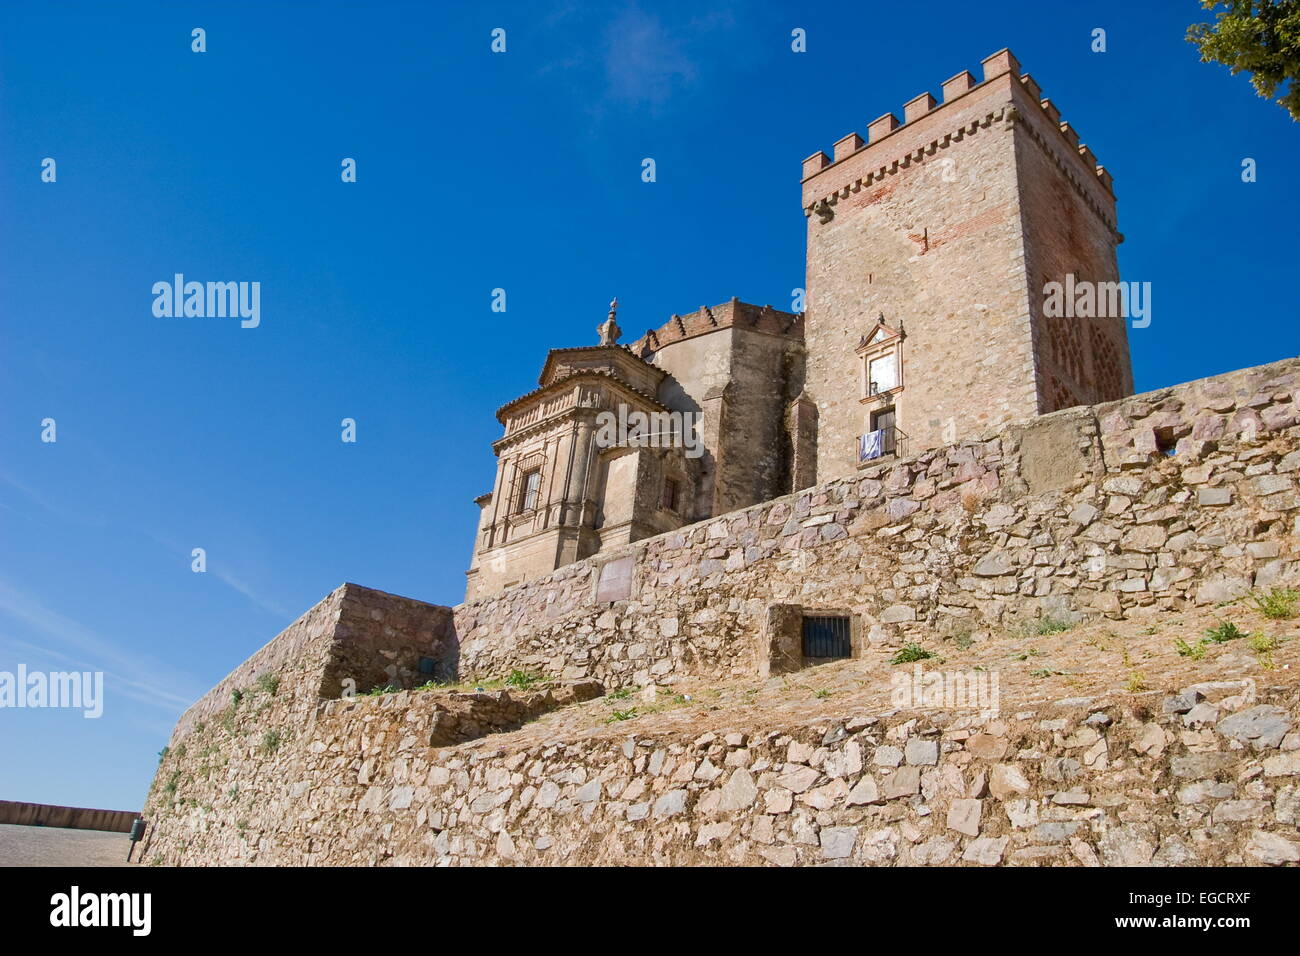 Castillo que encumbra la ciudad de Aracena, situada en la sierra del mismo nombre. / Castle that raise Aracena's city, placed in the mountain range of the same name. Stock Photo